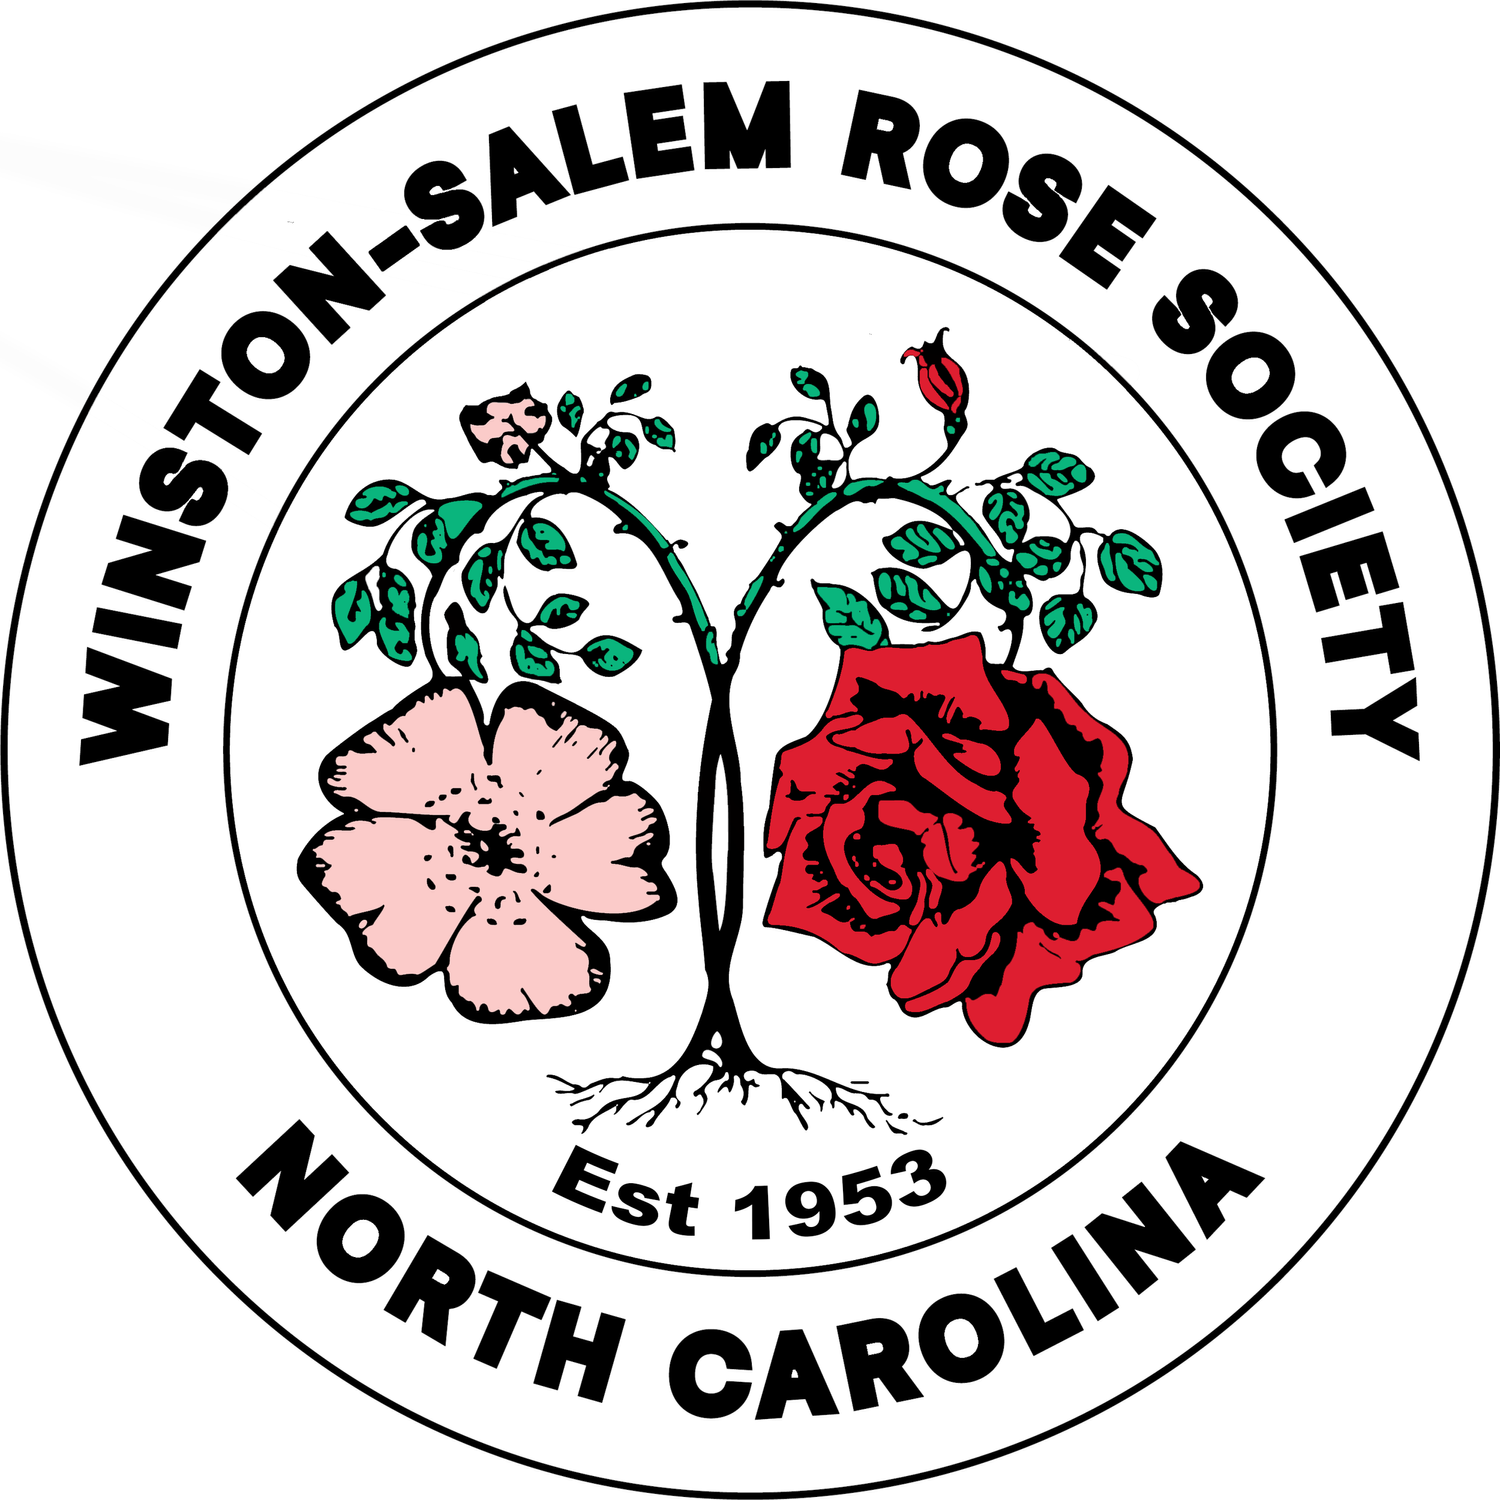 Winston Salem Rose Society